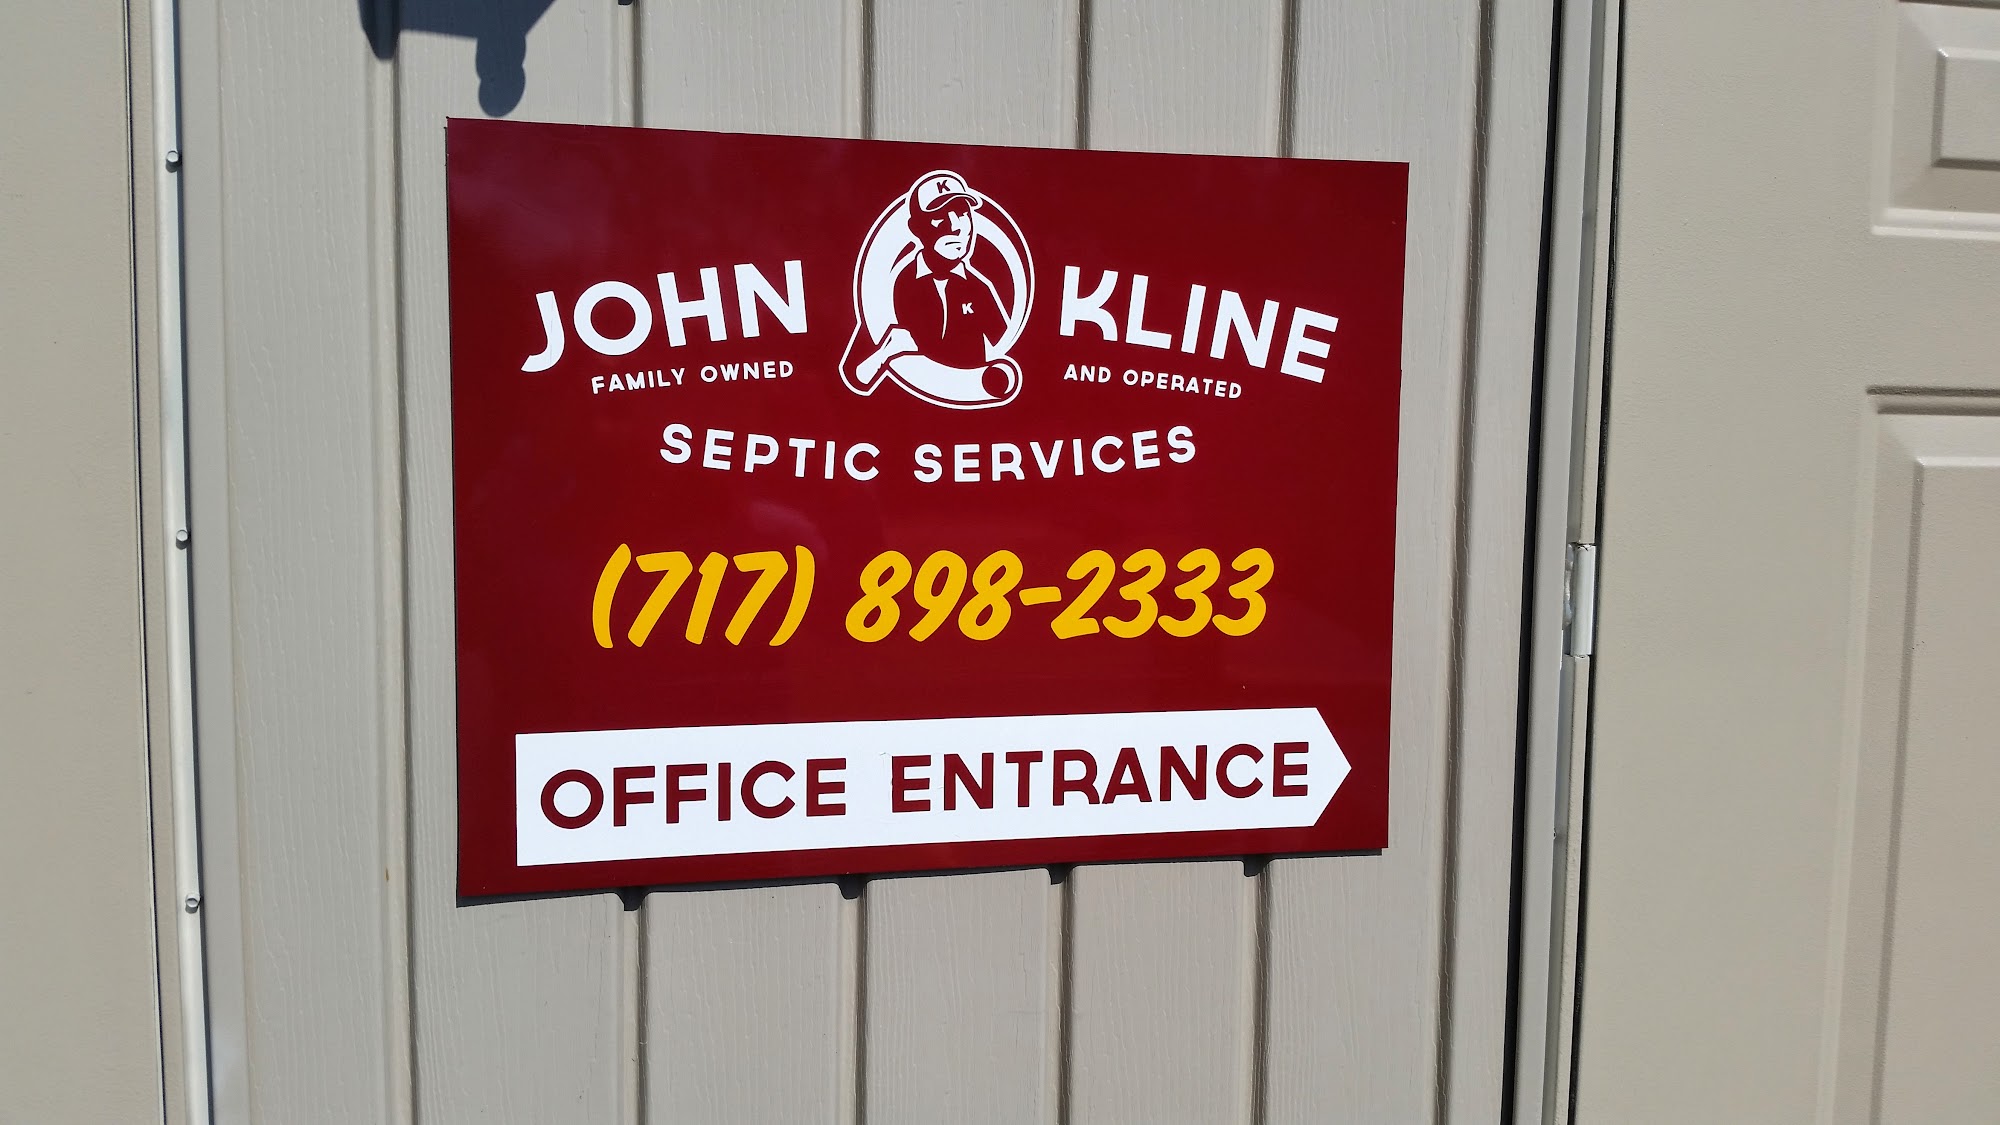 John Kline Septic Services 3869 Old Harrisburg Pike, Mount Joy Pennsylvania 17552